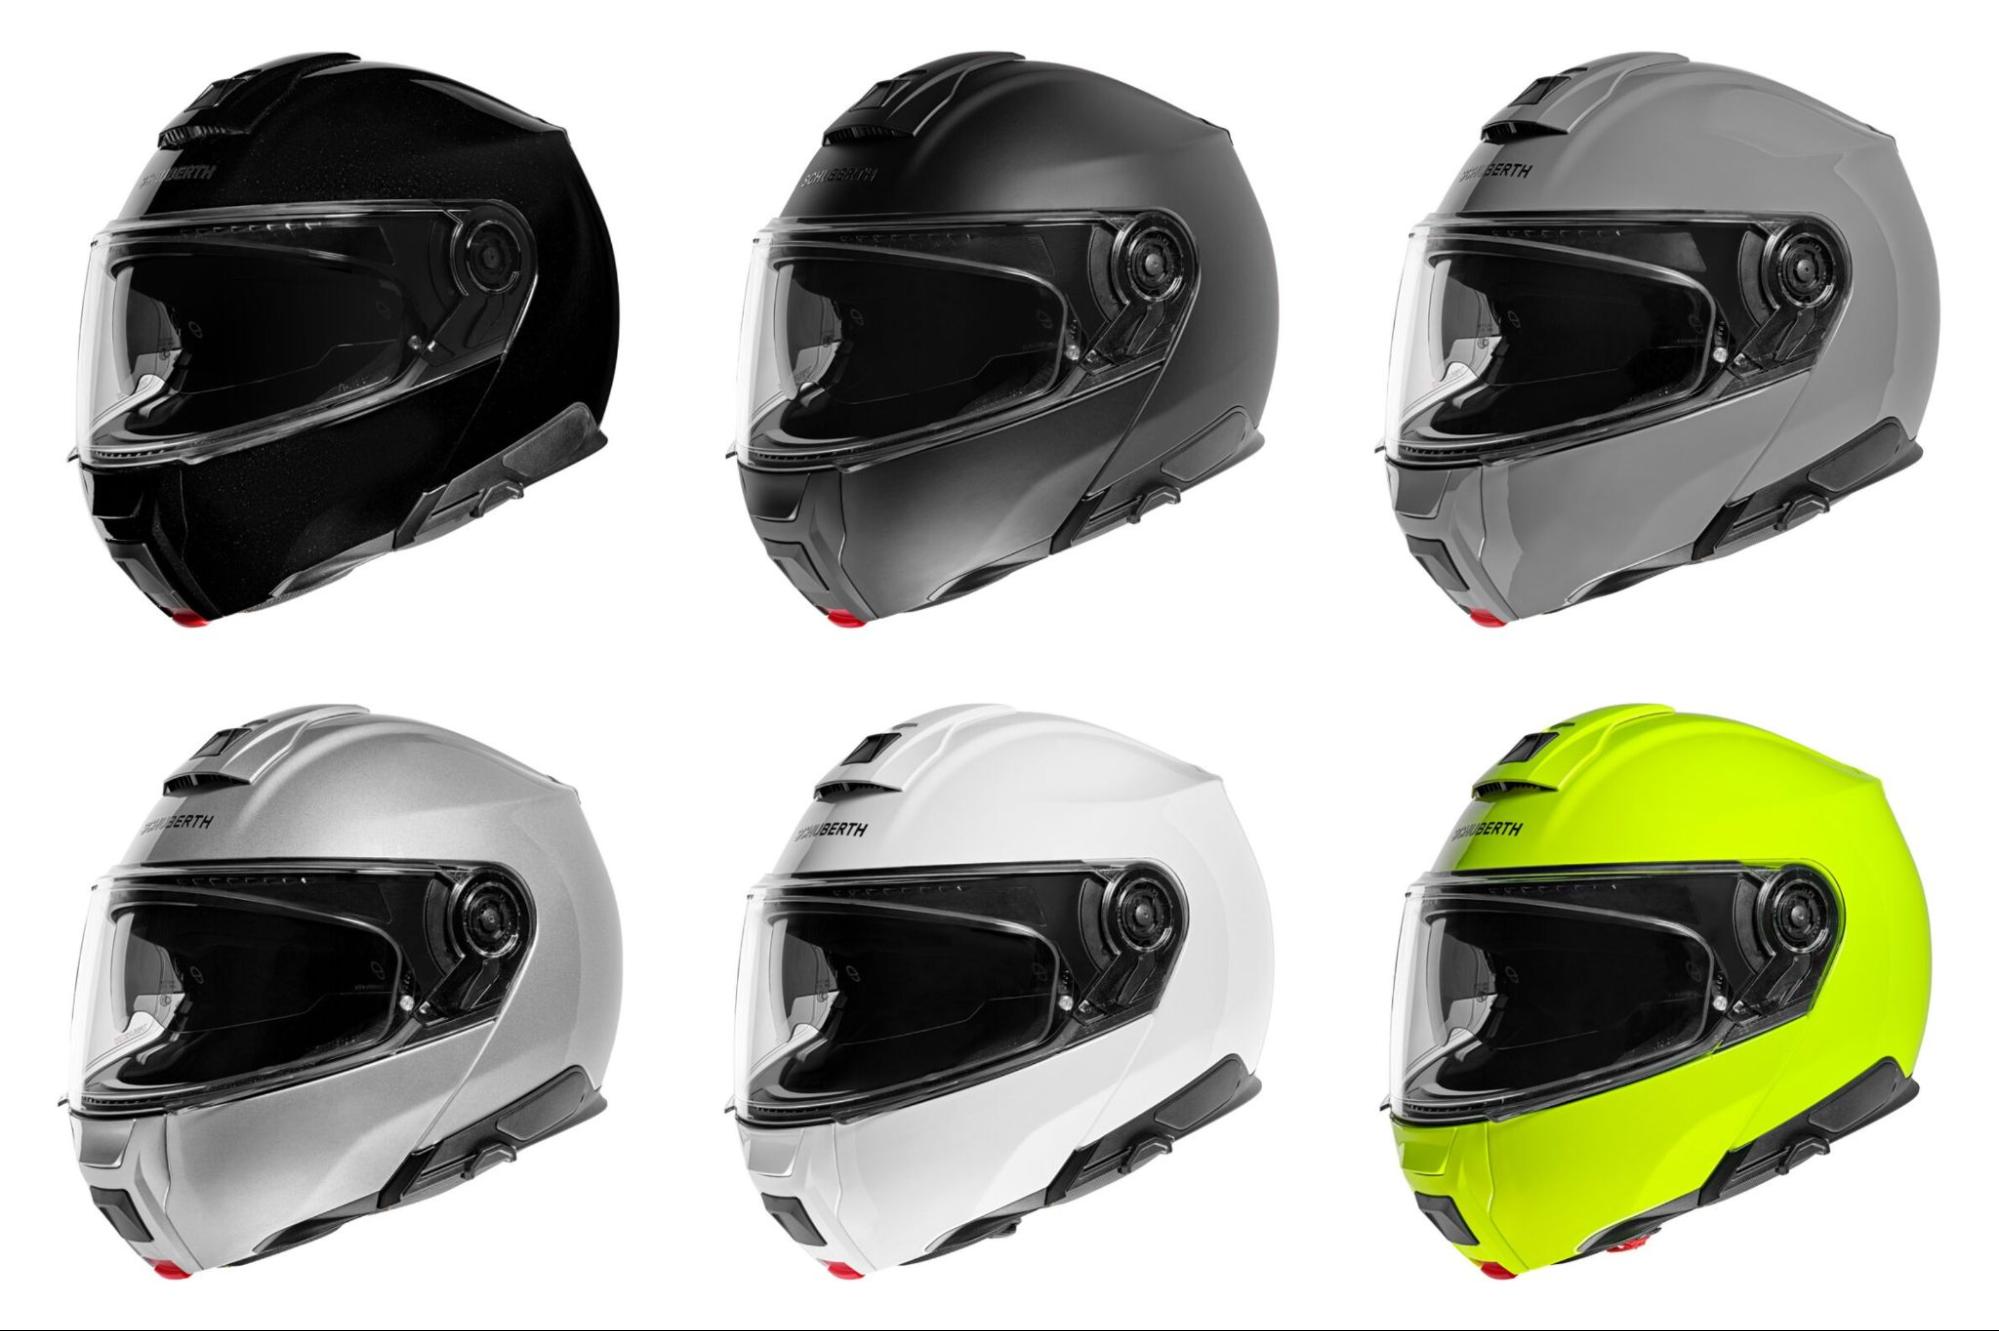 Various solid colorways on the Schuberth C5 Helmet